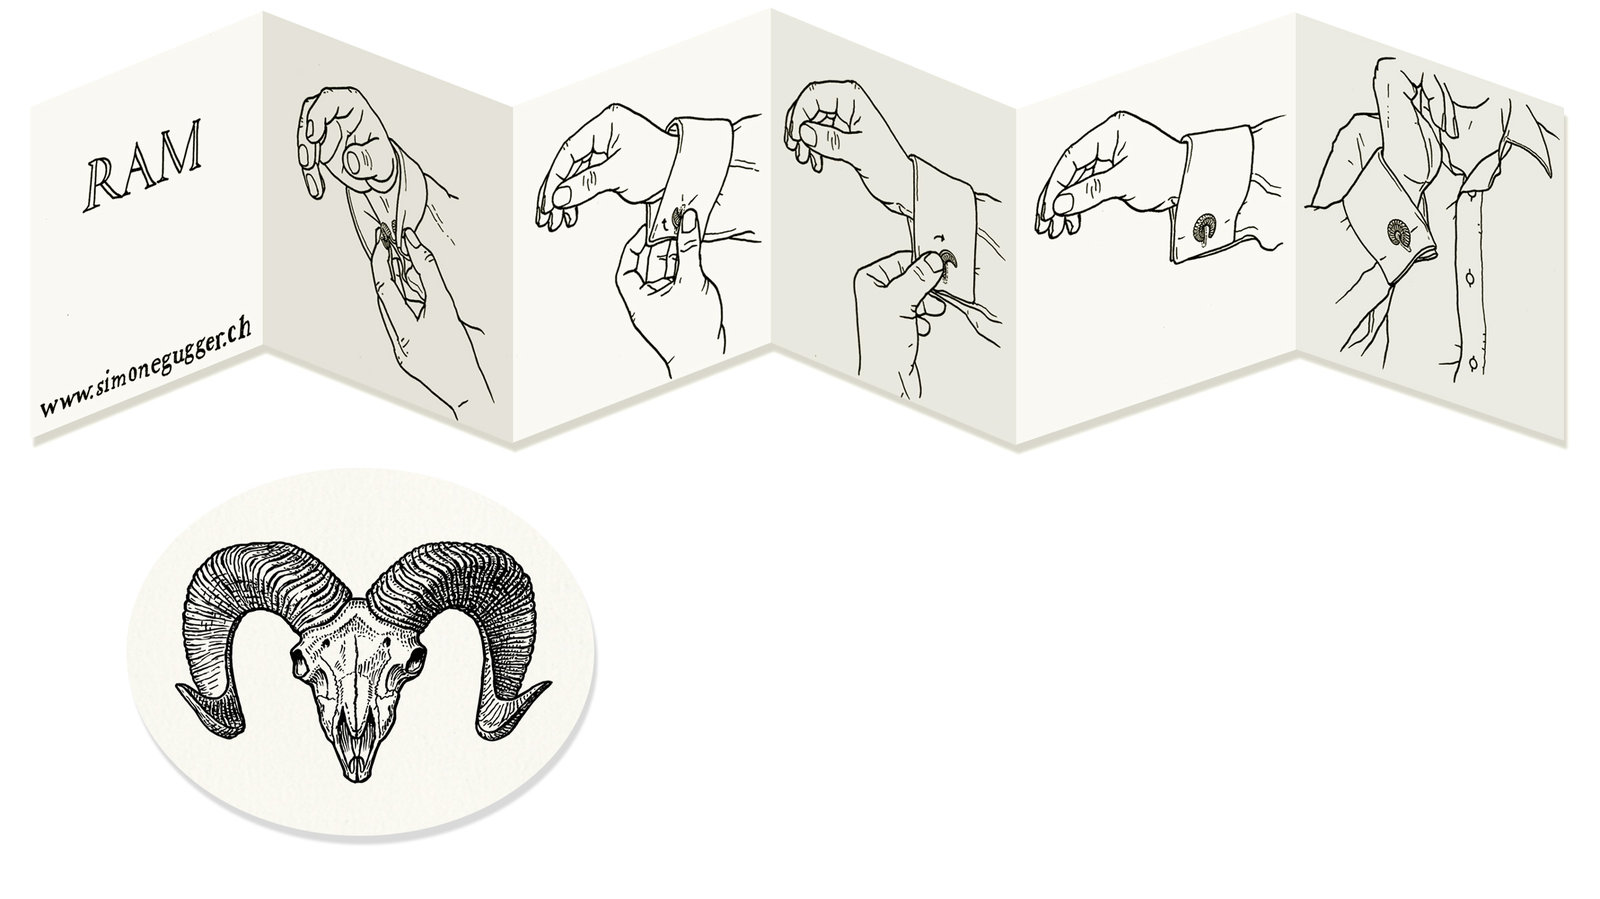 oculus-illustration-anleitung-leporello-widderkopf-manschettenknoepfe-produkt